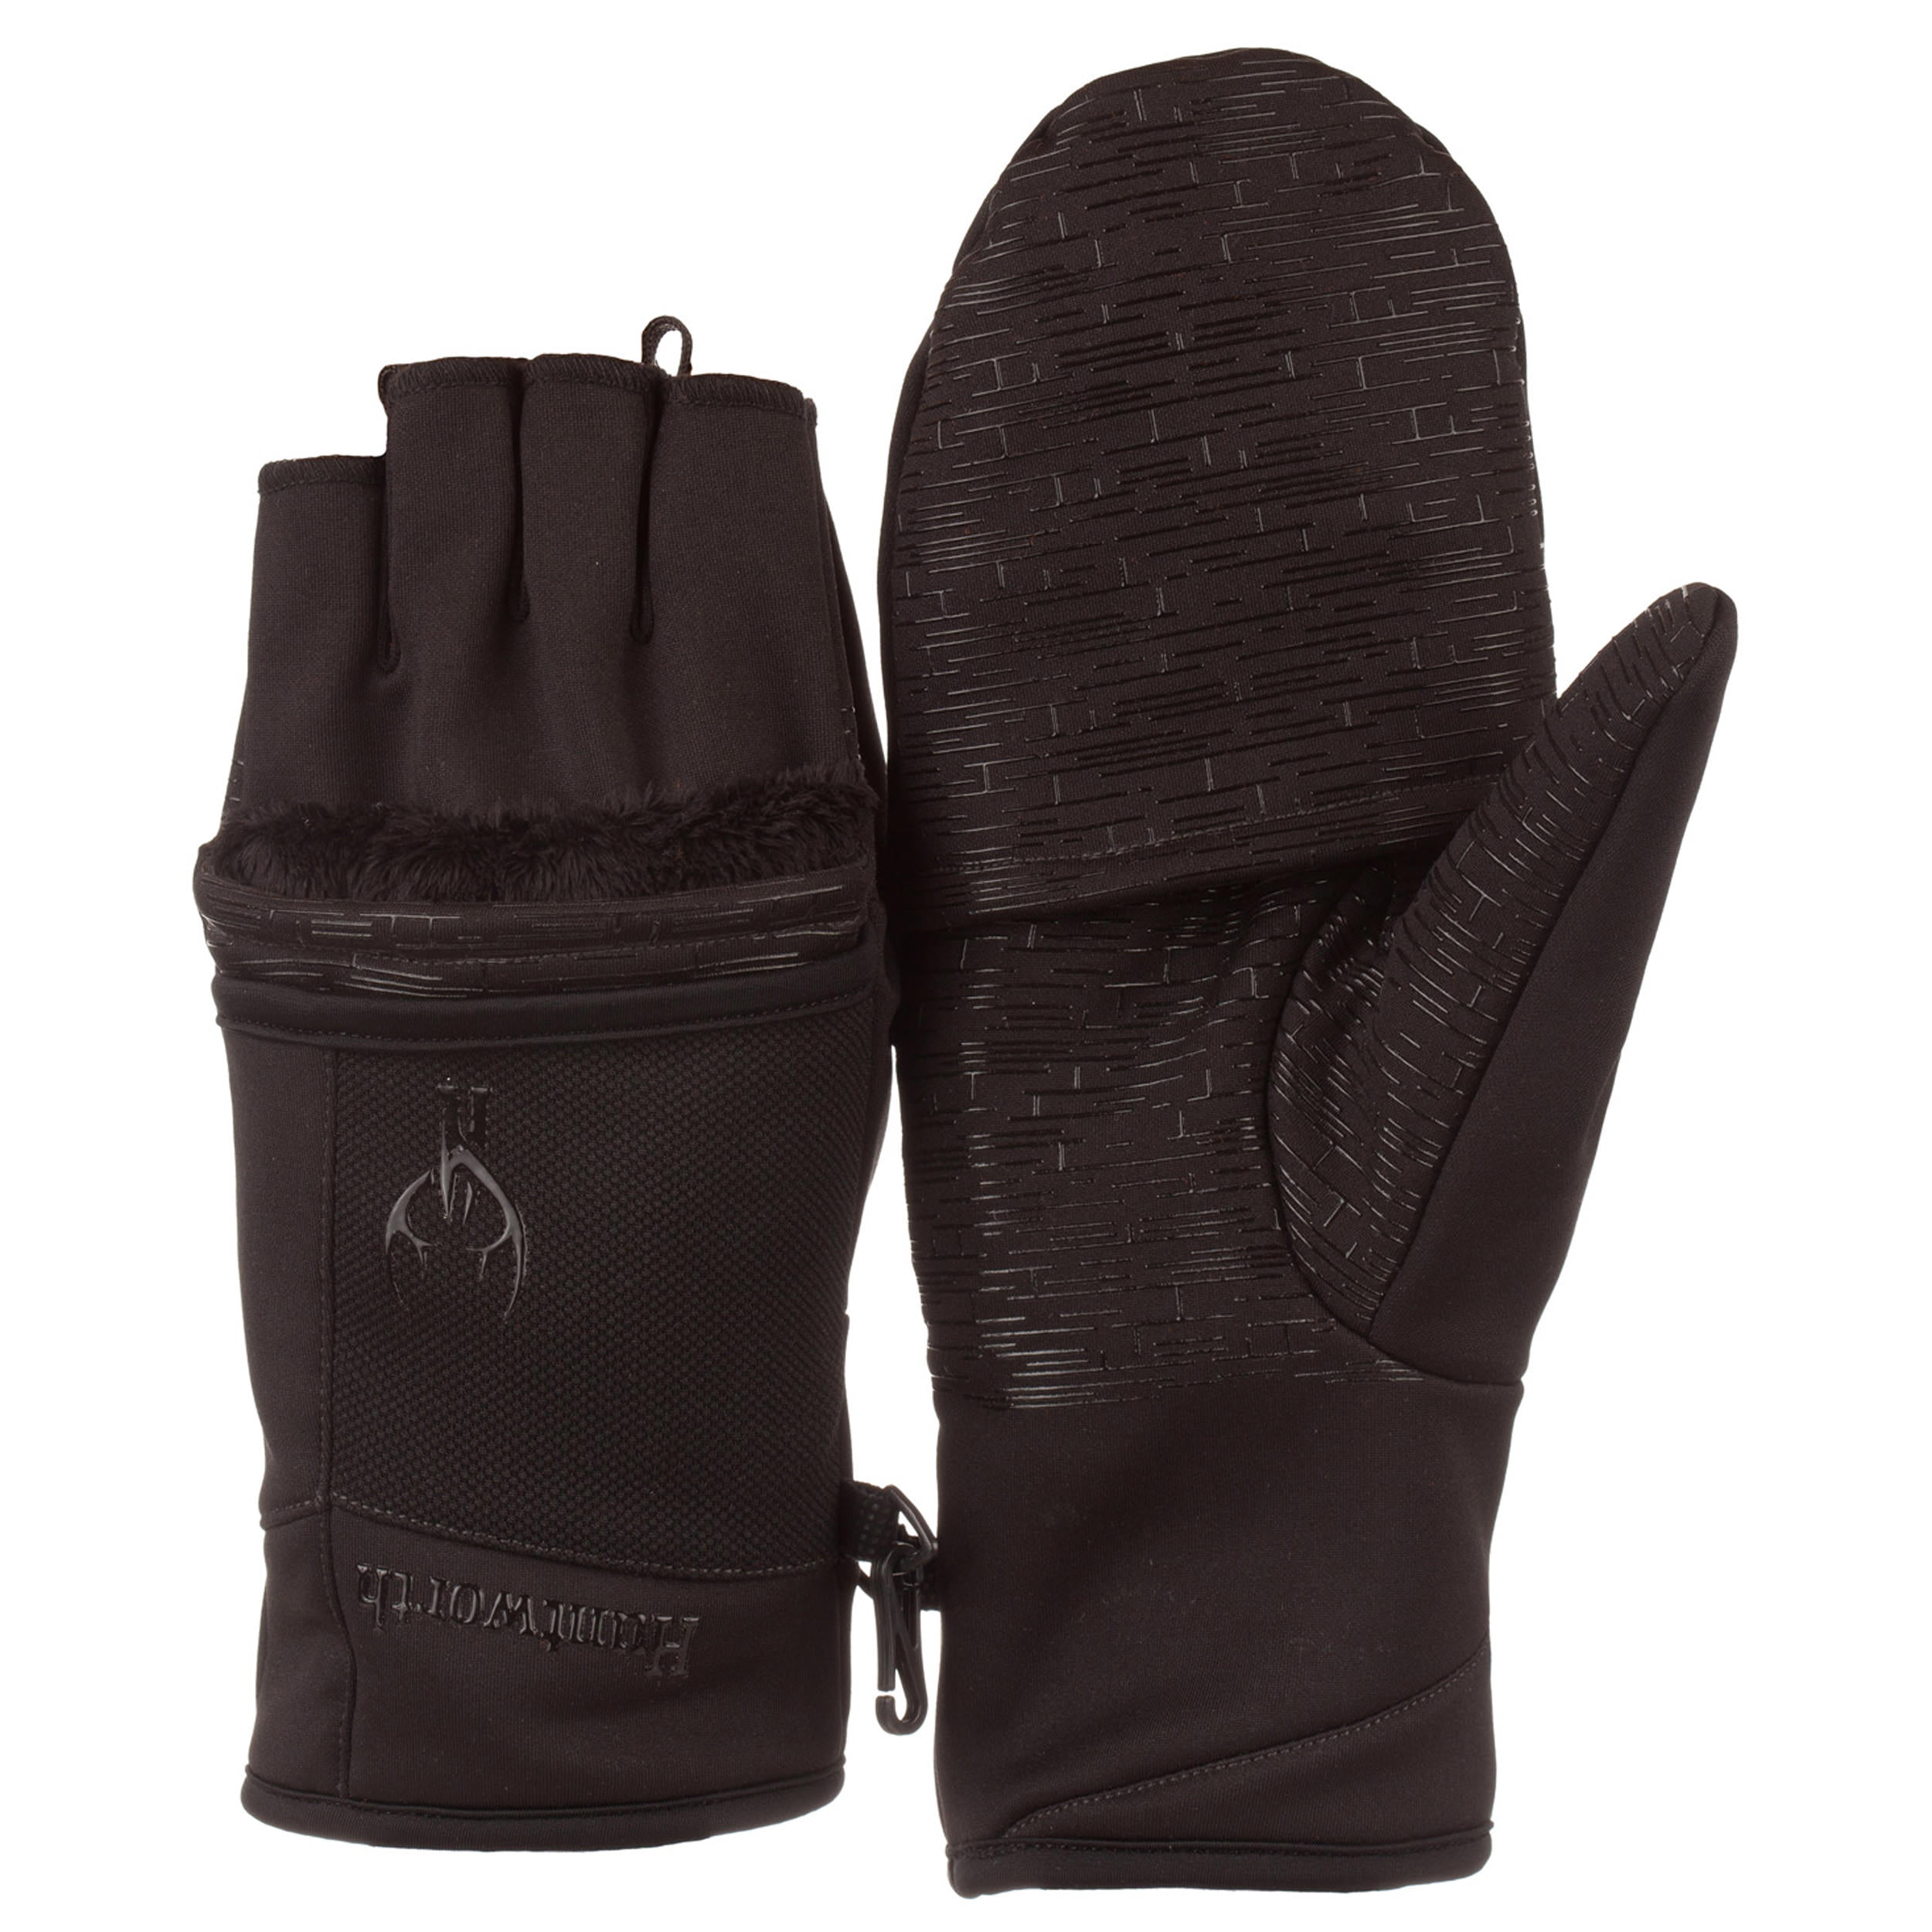 HUNTWORTH REALTREE NEW EDGE GUNNER Midweight Gloves M/L  WATERREPELLENT 